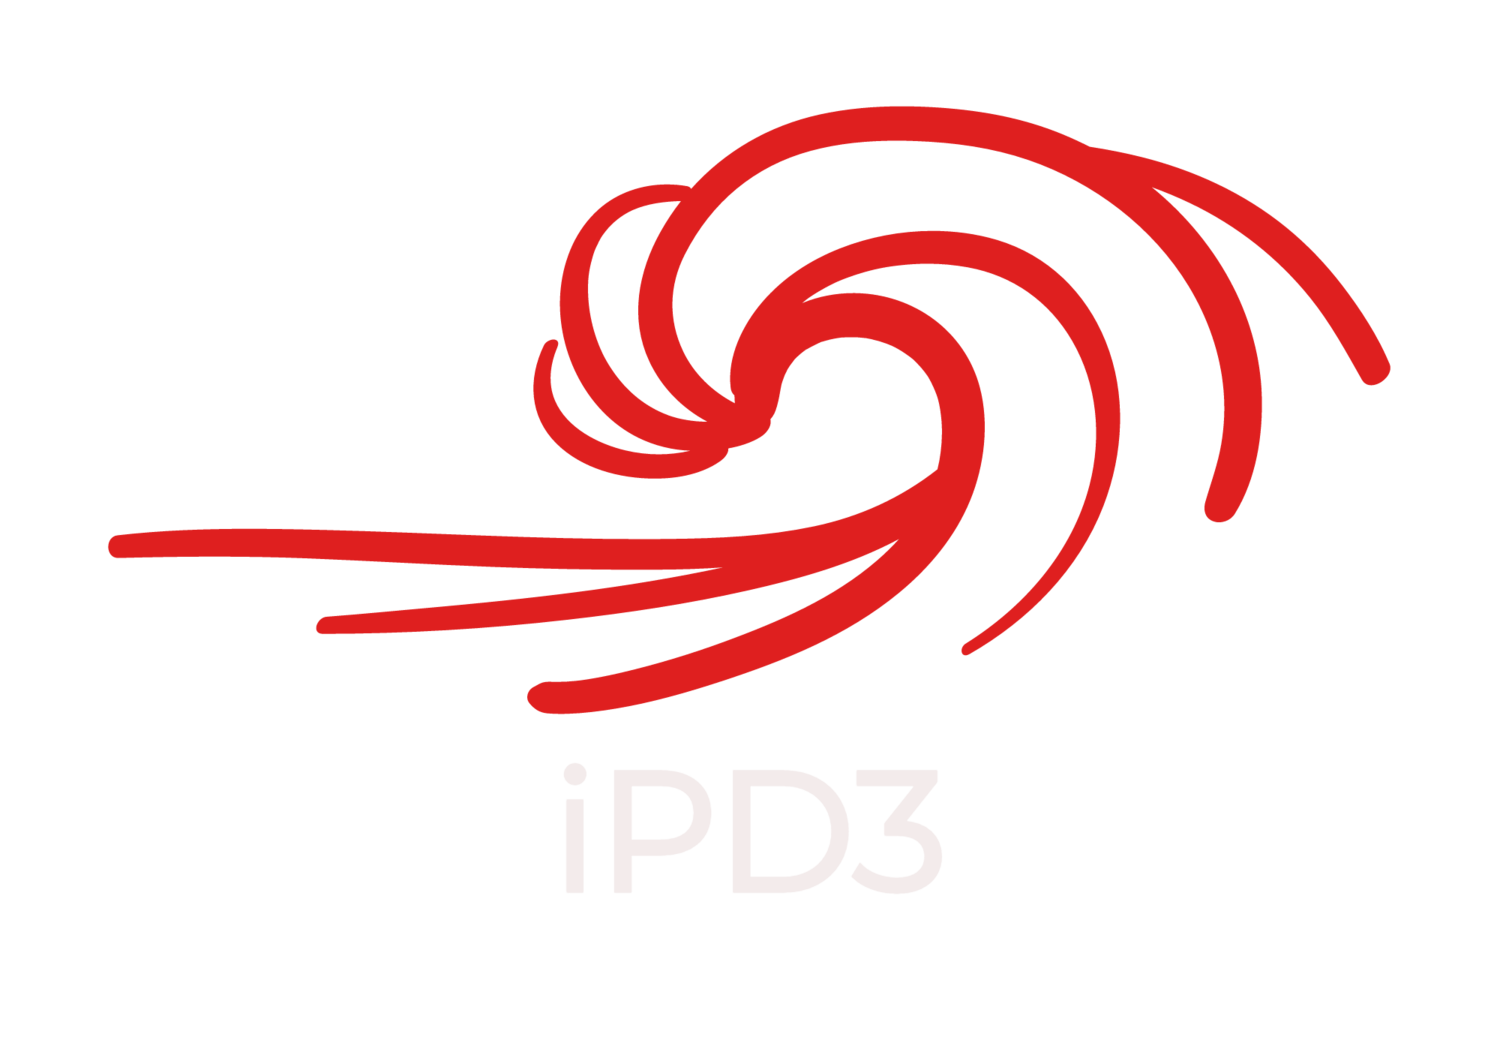 iPD3